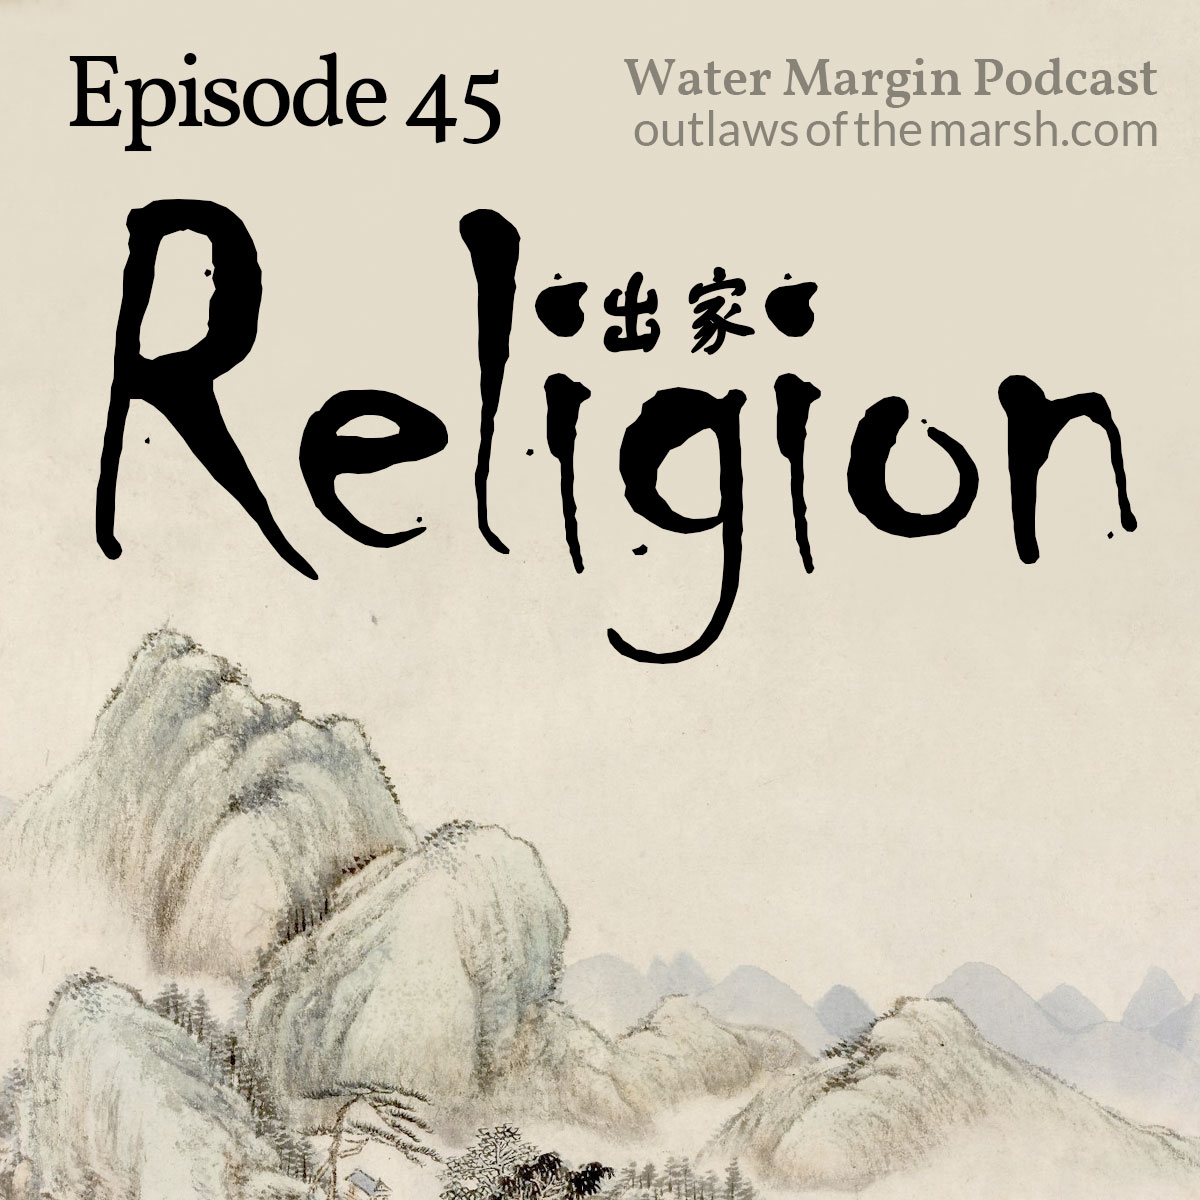 Water Margin Podcast: Episode 045